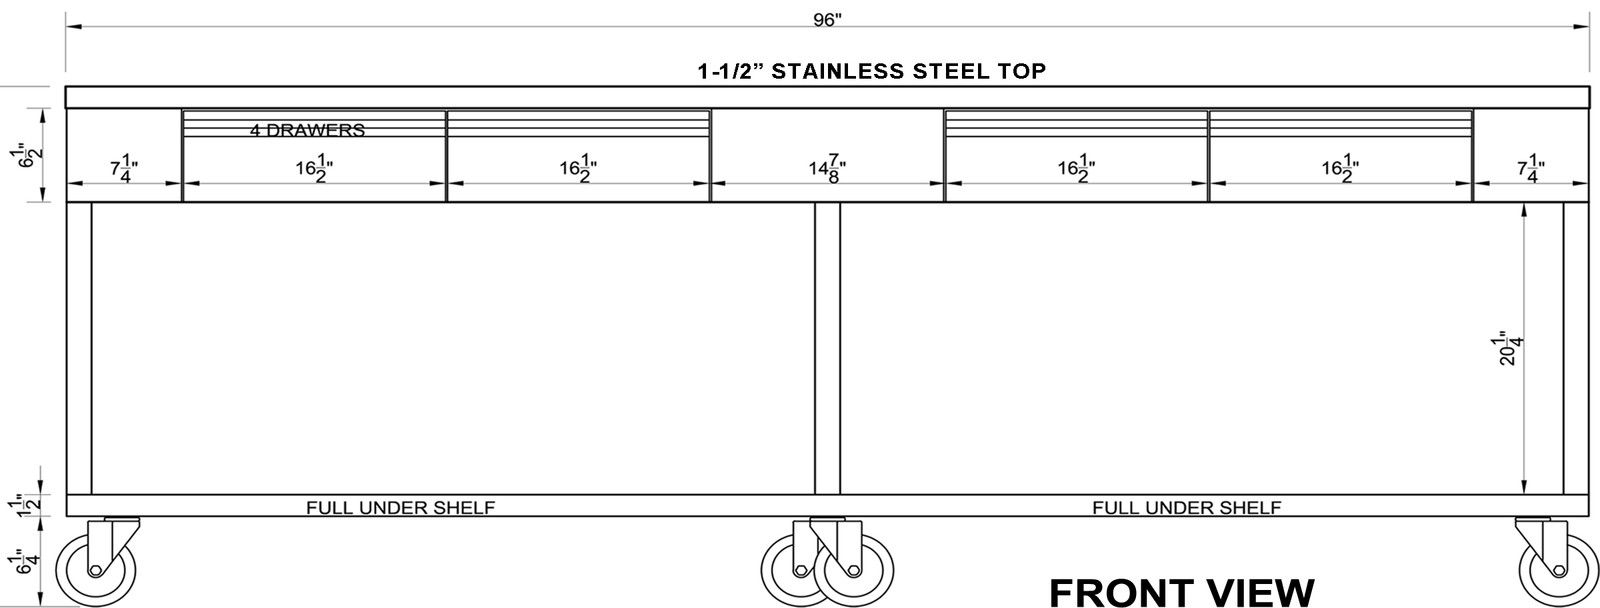 HEAVY DUTY STAINLESS STEEL PREP ISLAND TABLE  30"X96" 4 DRAWERS, FULL UNDERSHELF - Best Sheet Metal, Inc. 